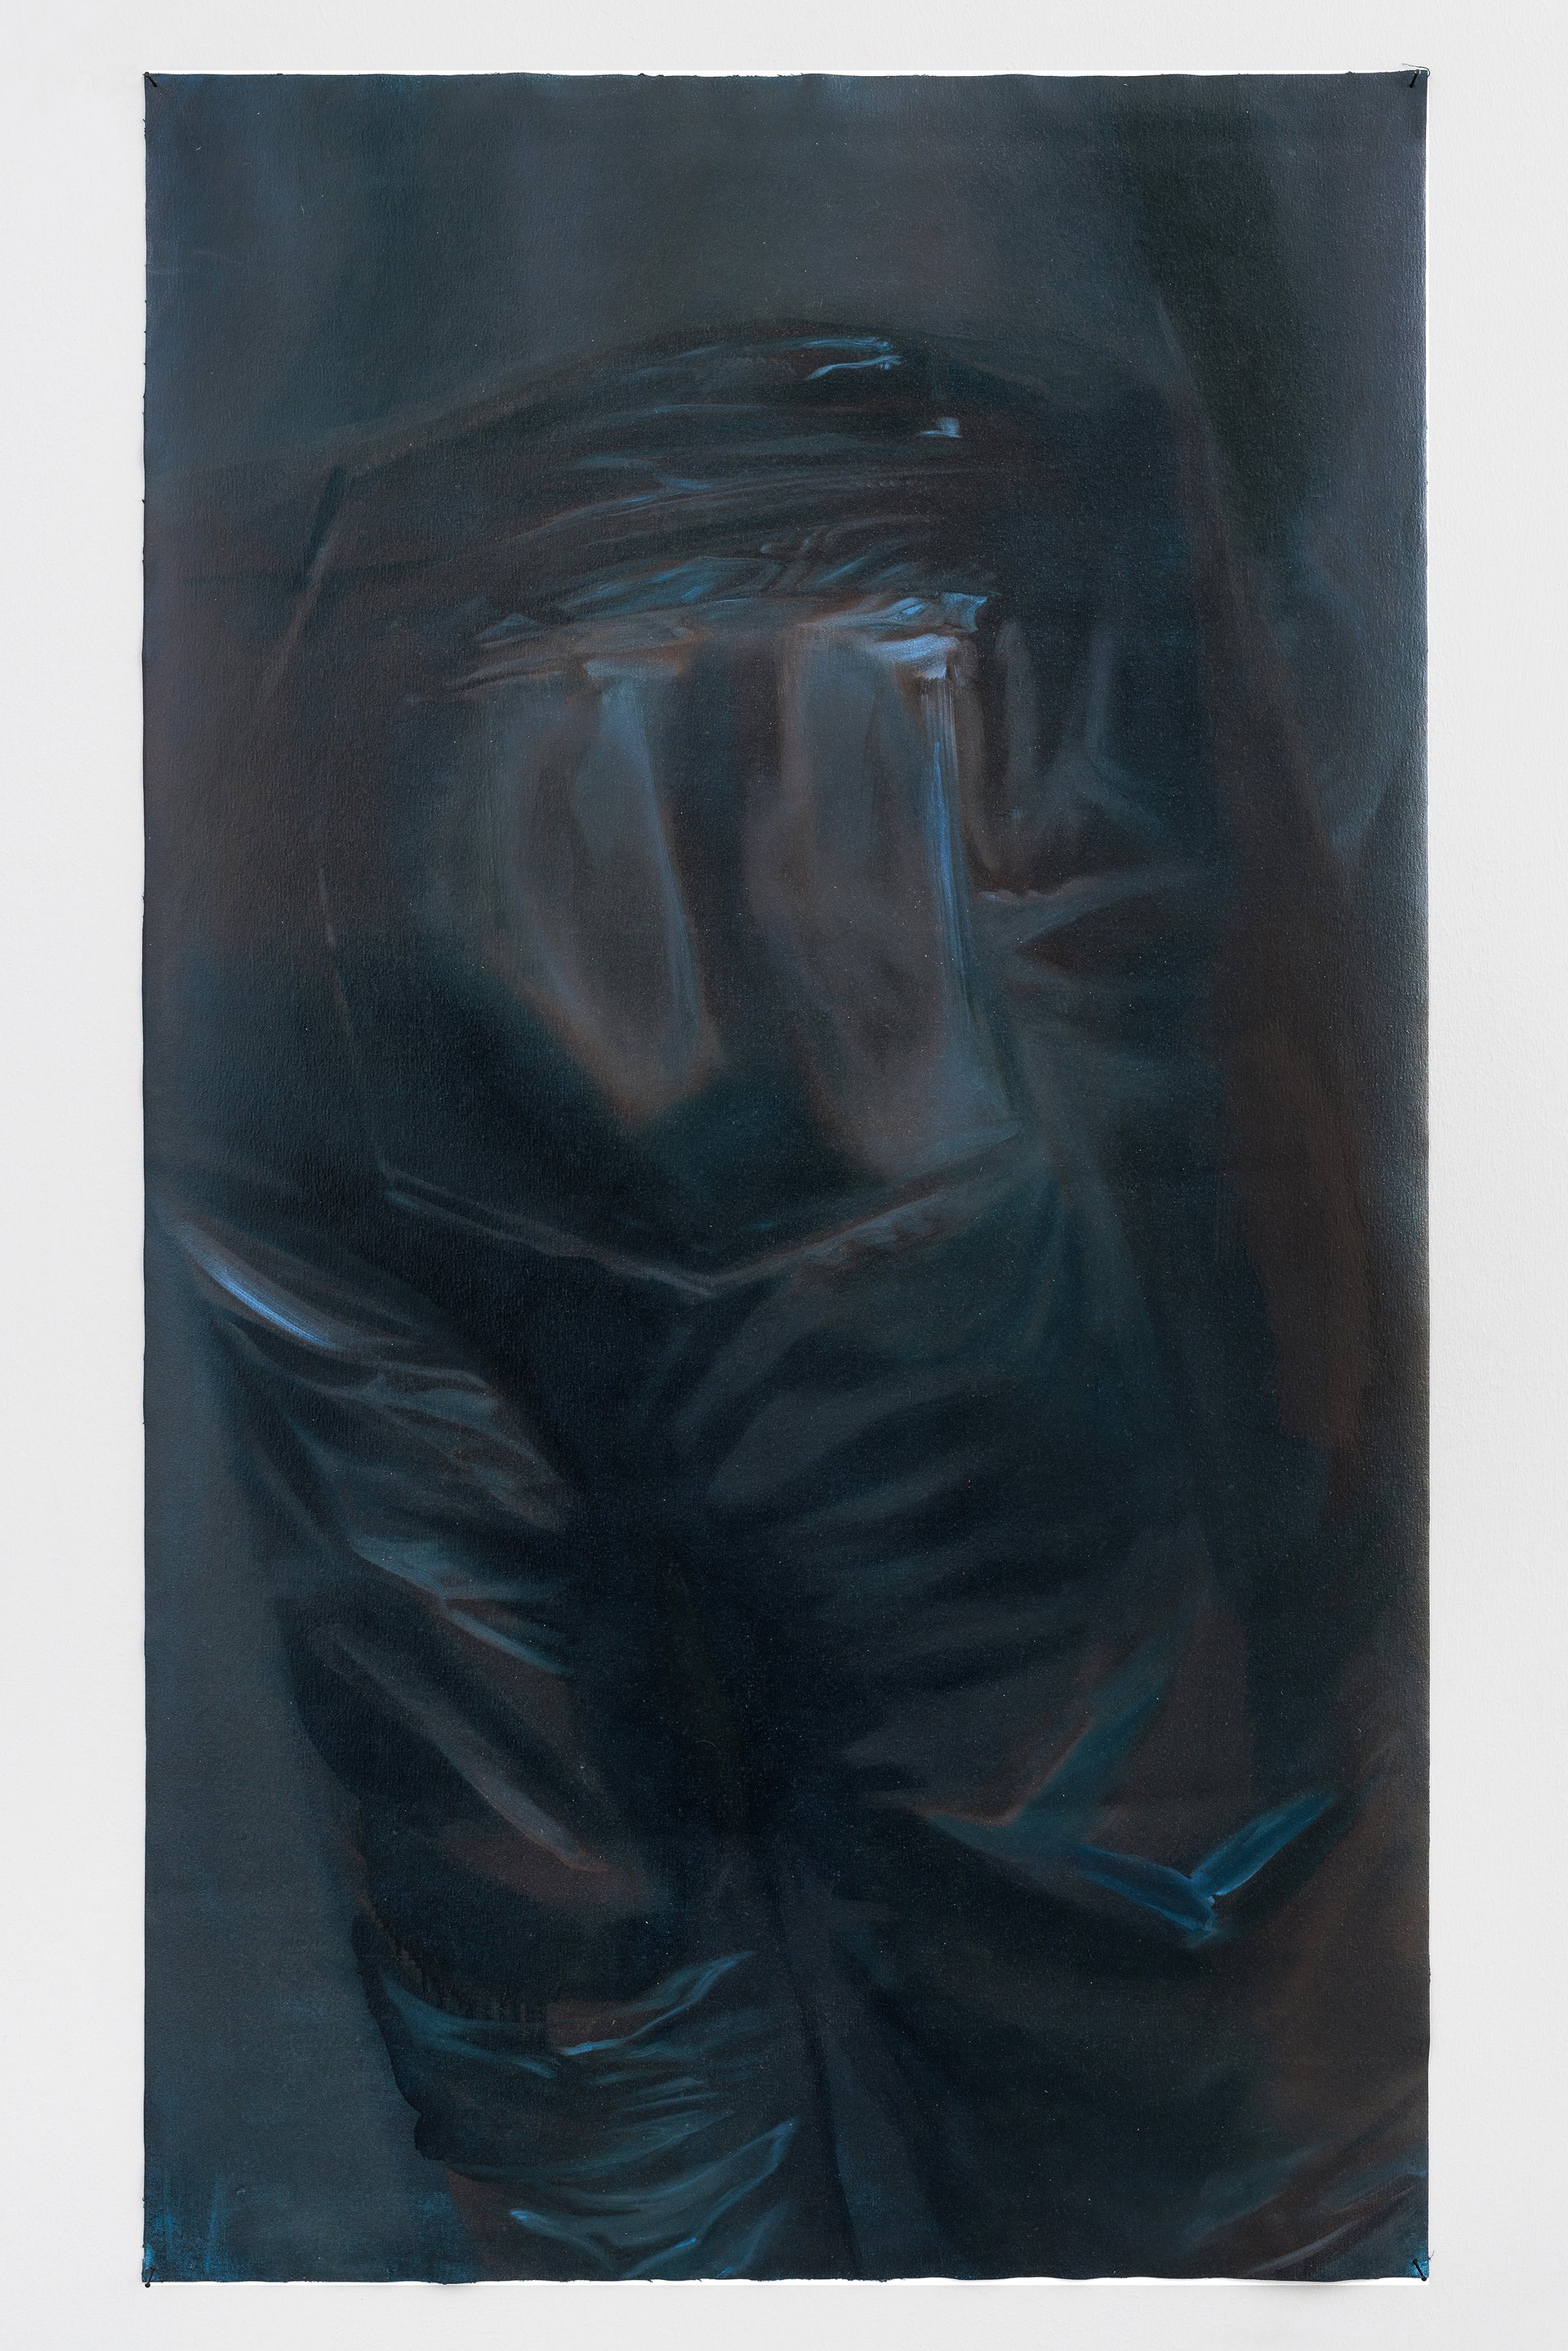 Evelyn PlaschgPocket (deep), 2023Oil on canvas150.5 x 88.5 cm